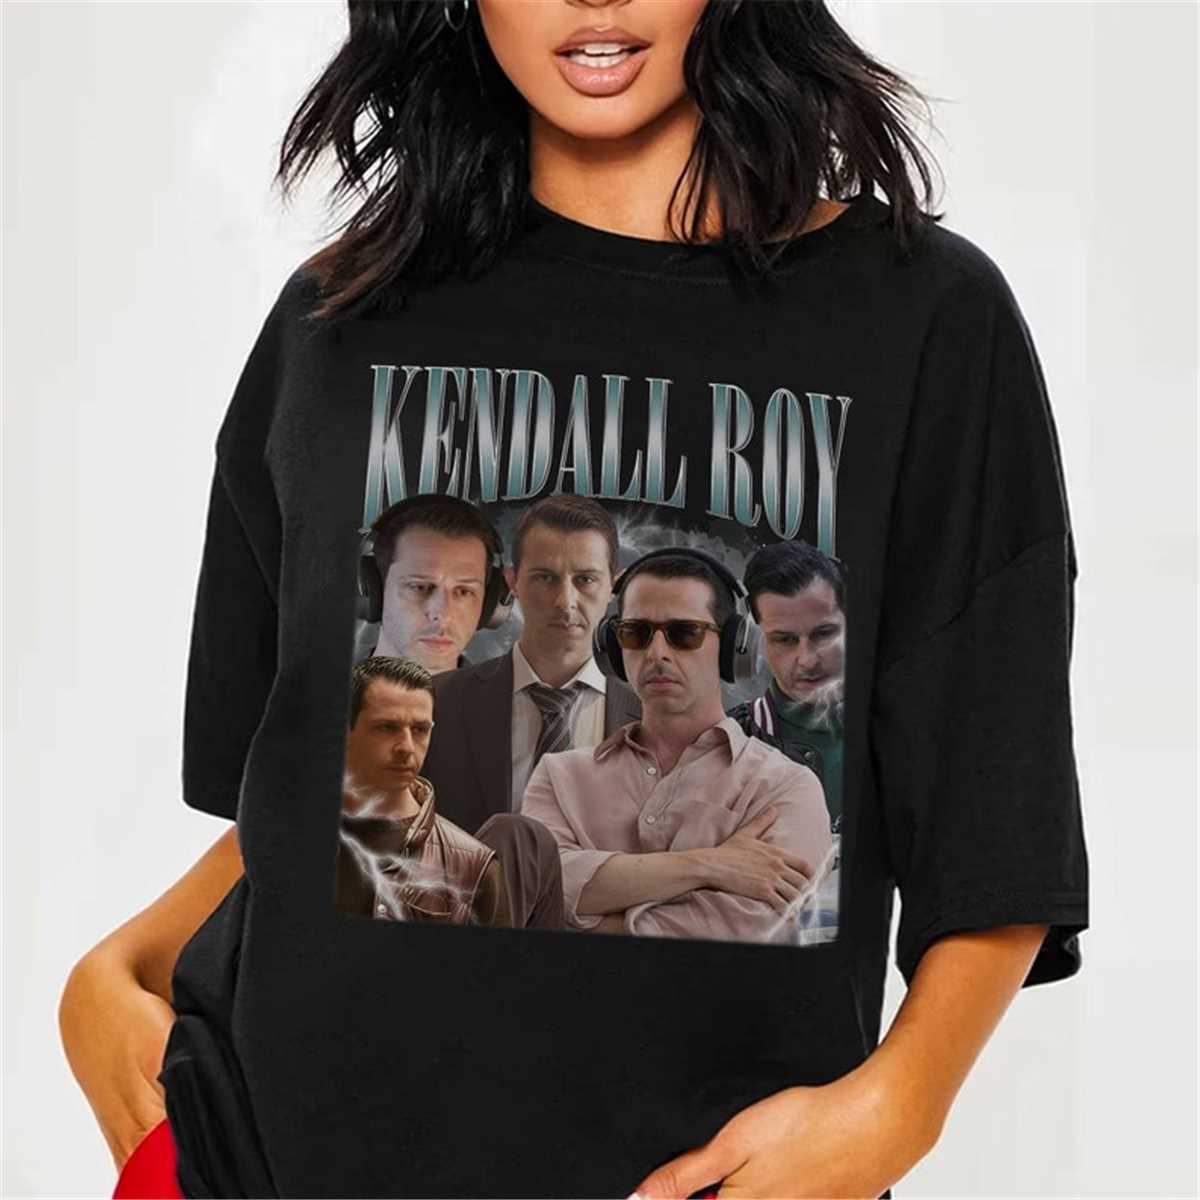 kendall roy t shirt